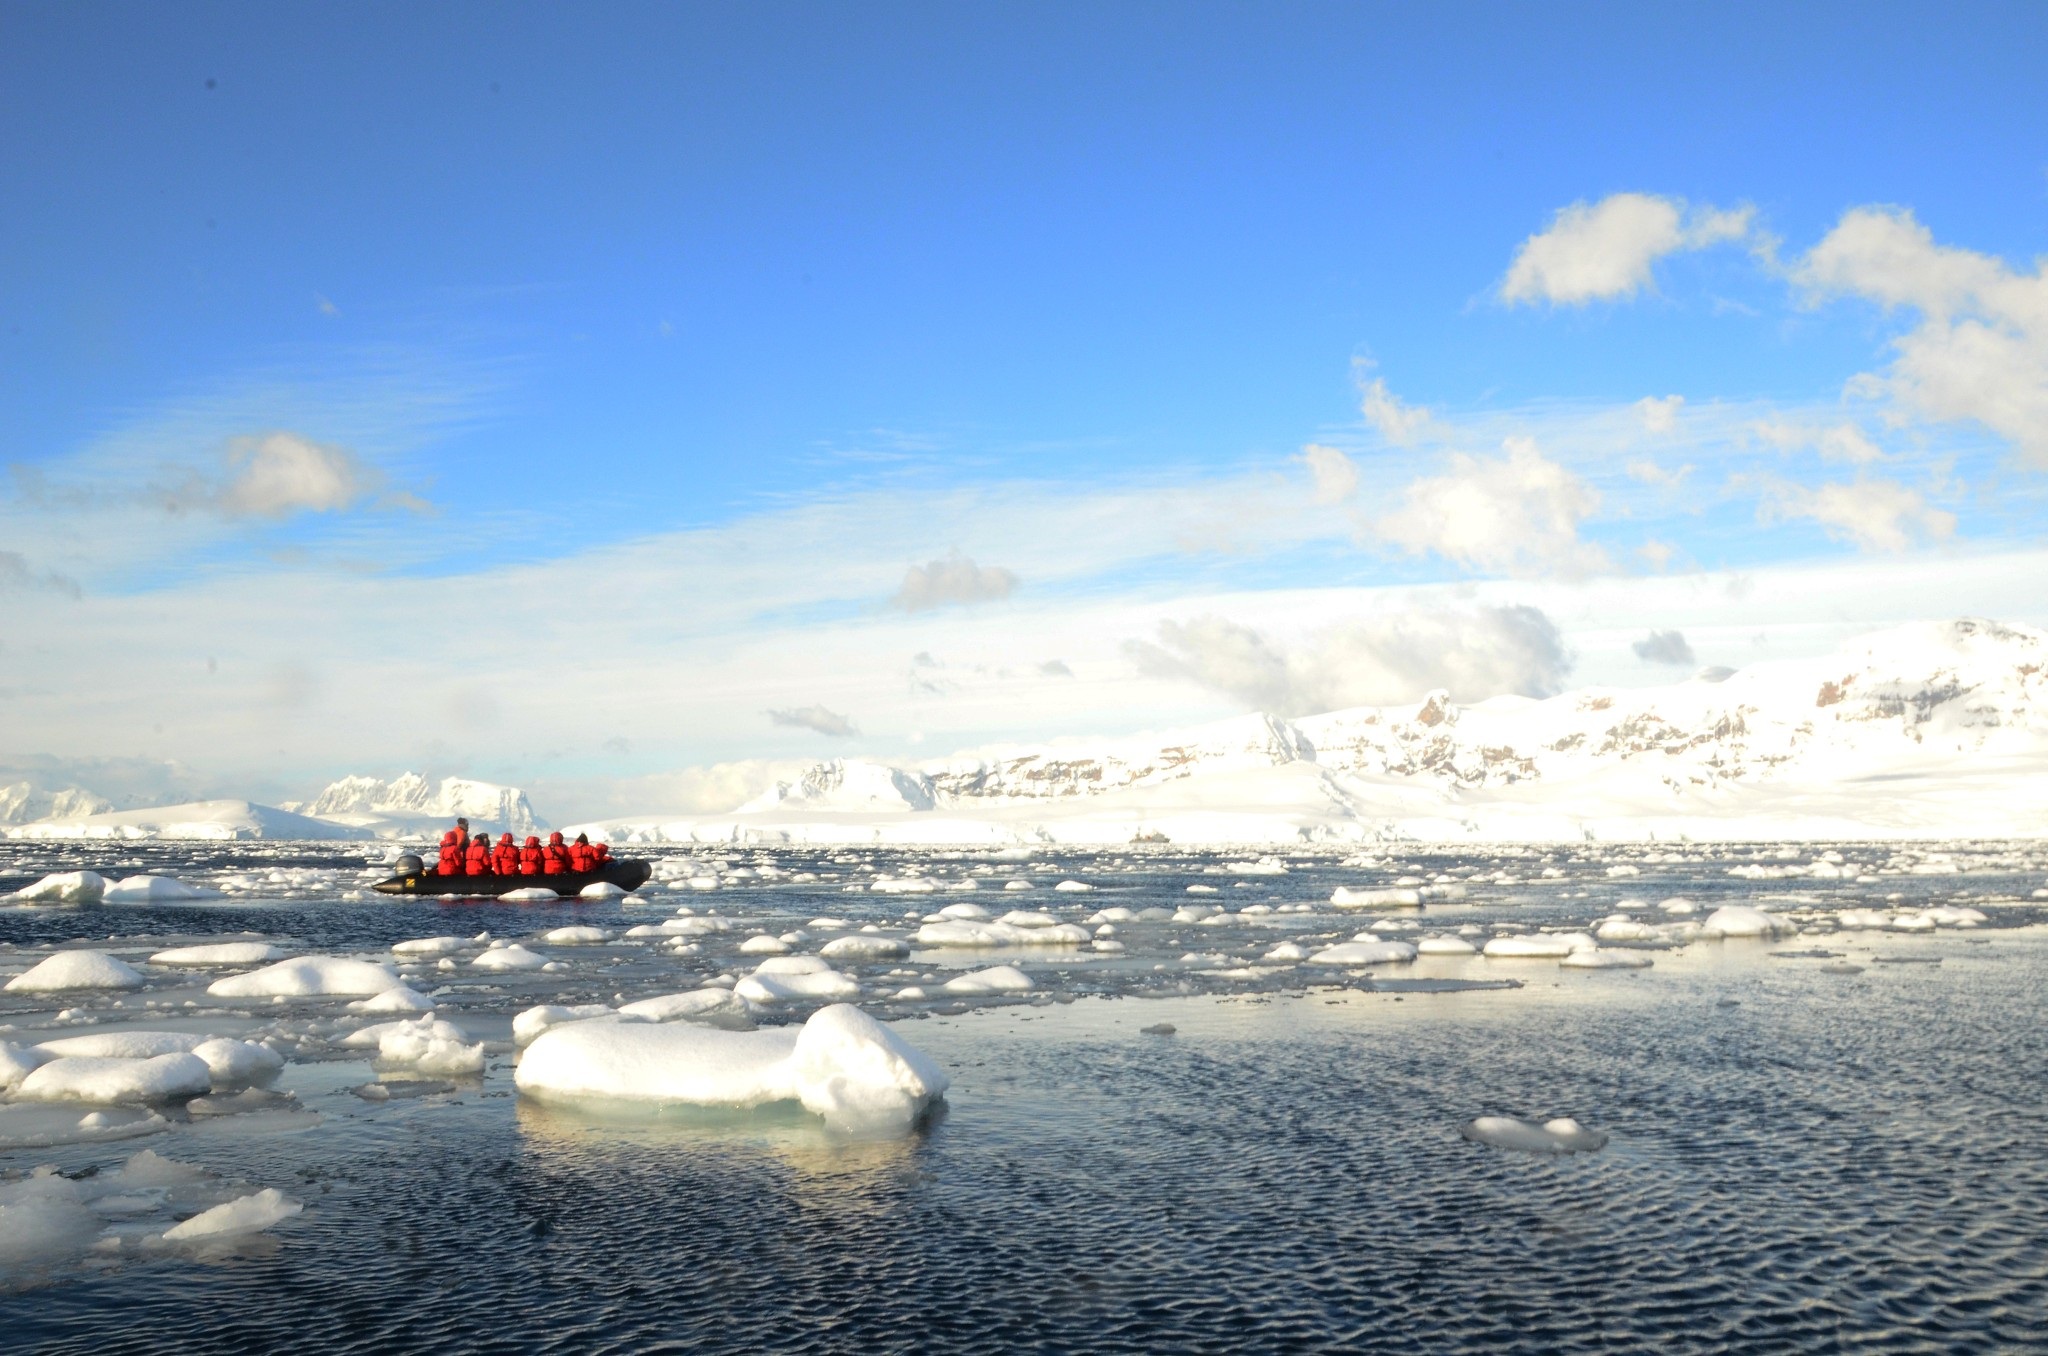 Voyage en Antarctique - Guide pratique